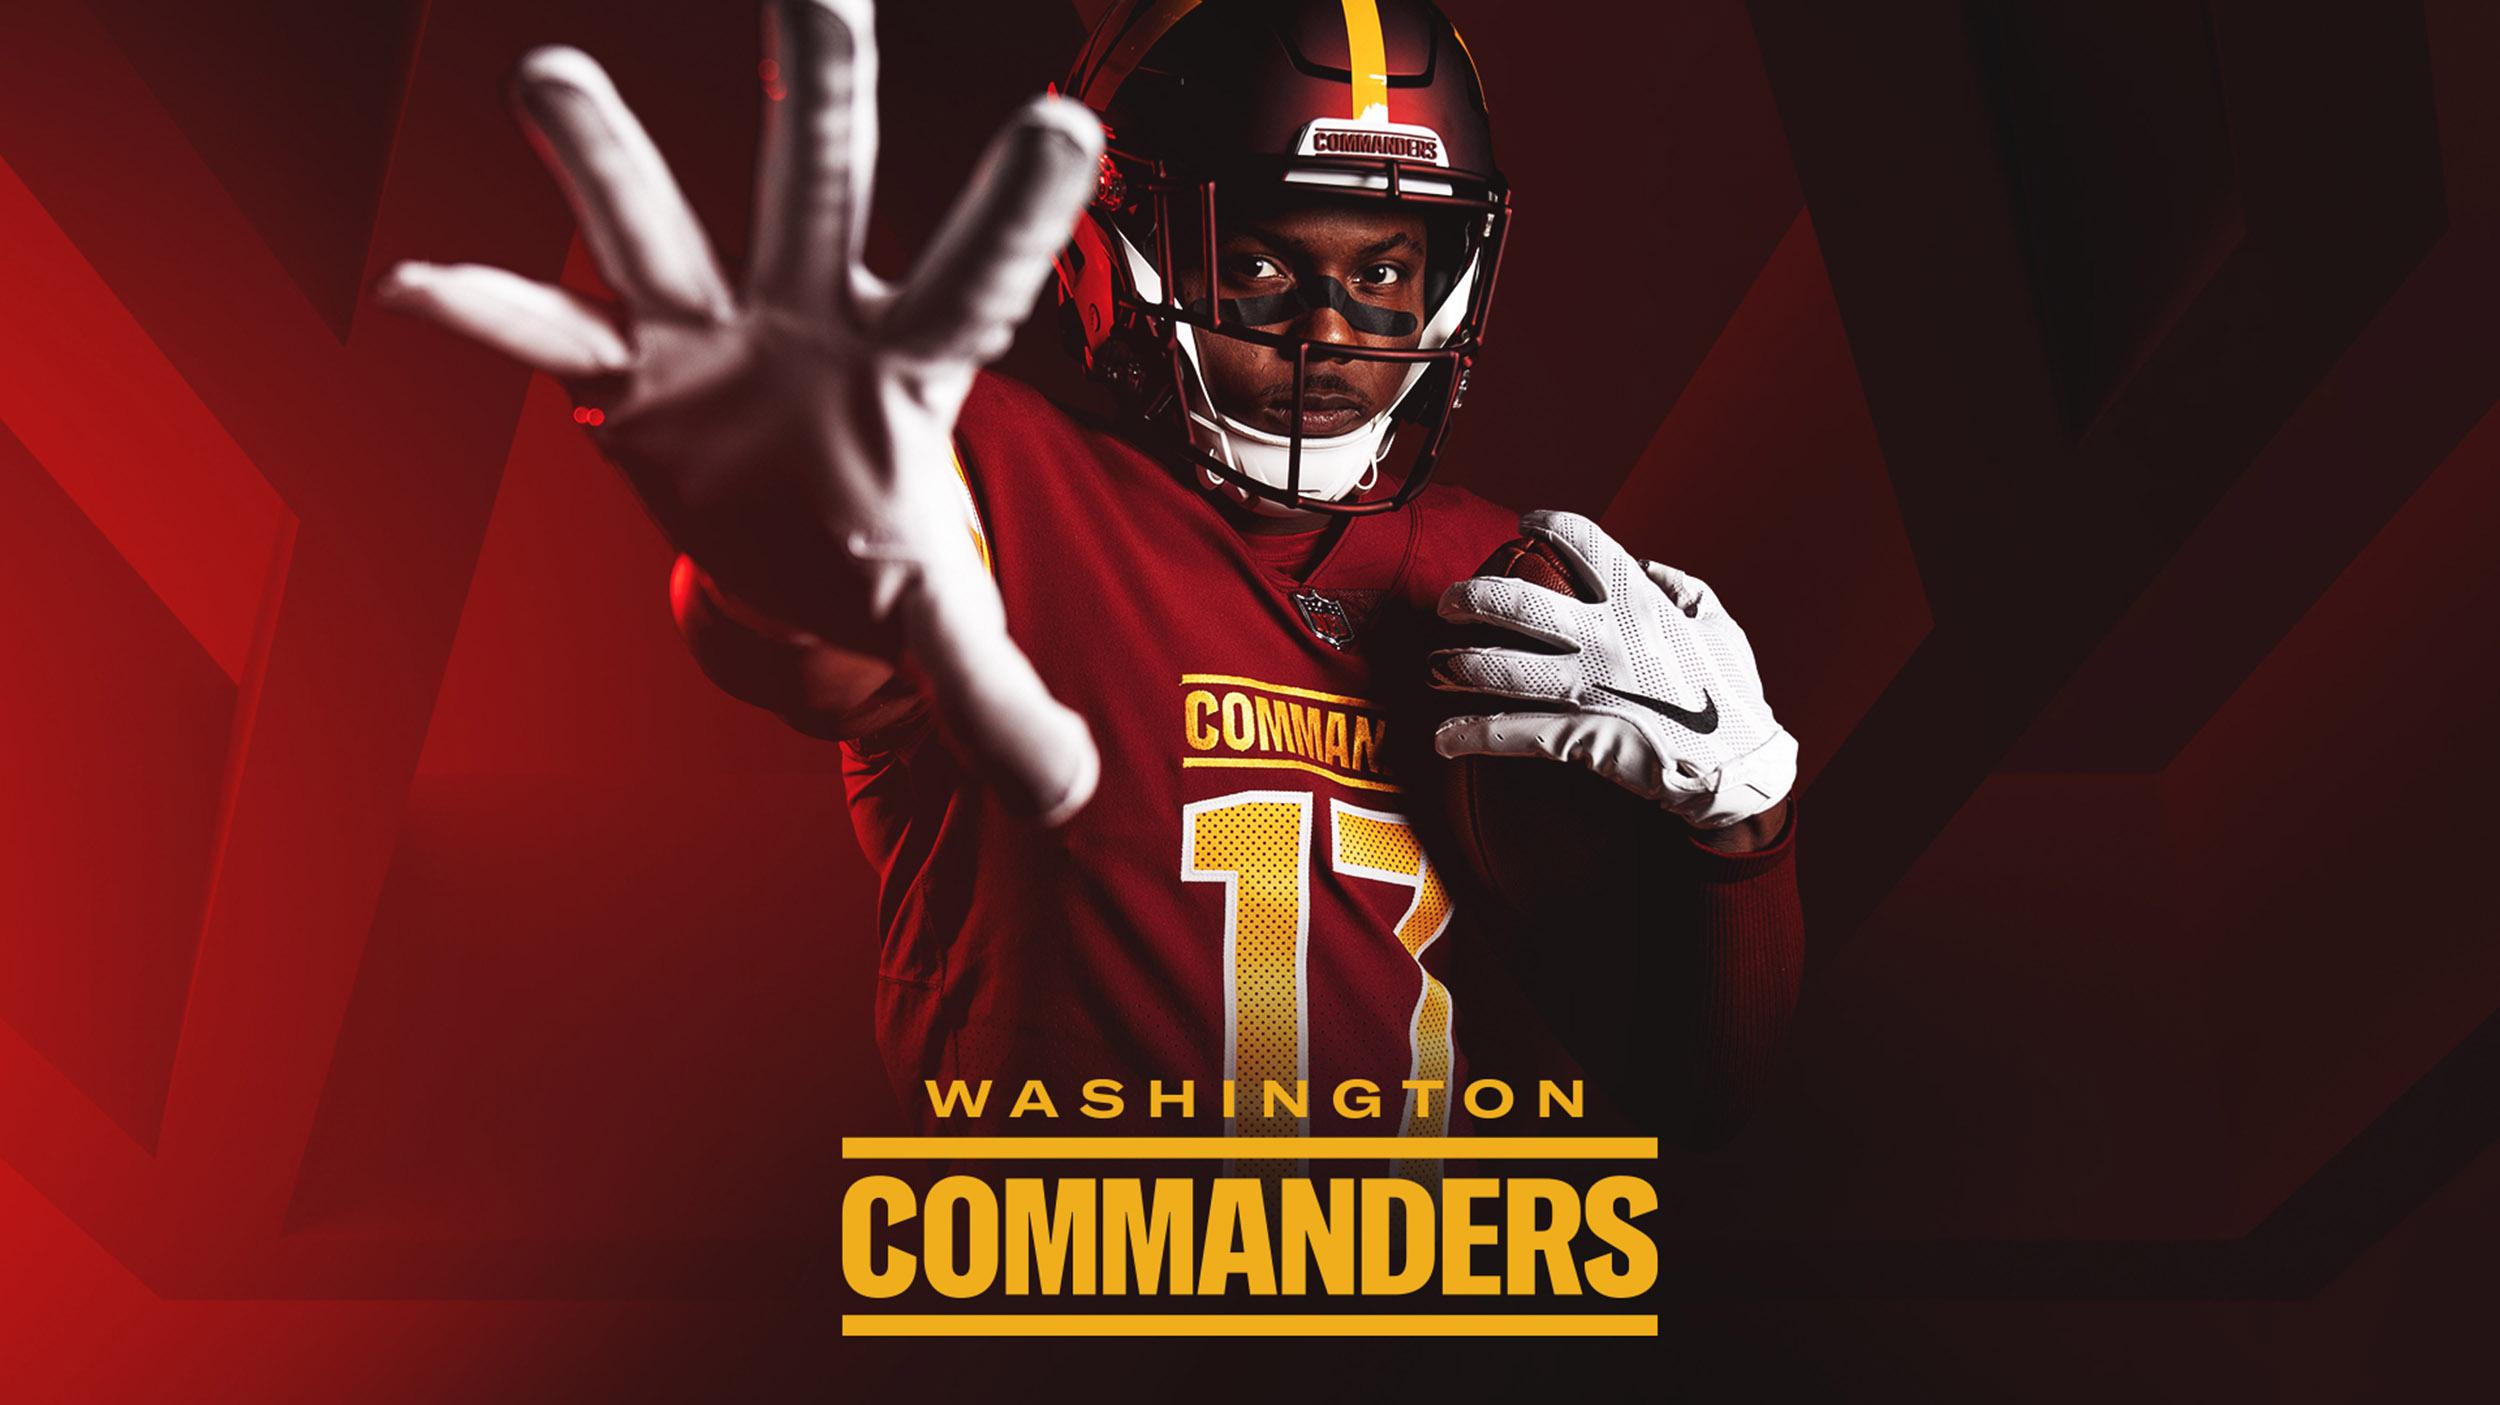 Washington Commanders is The New Name of The Washington Football Team